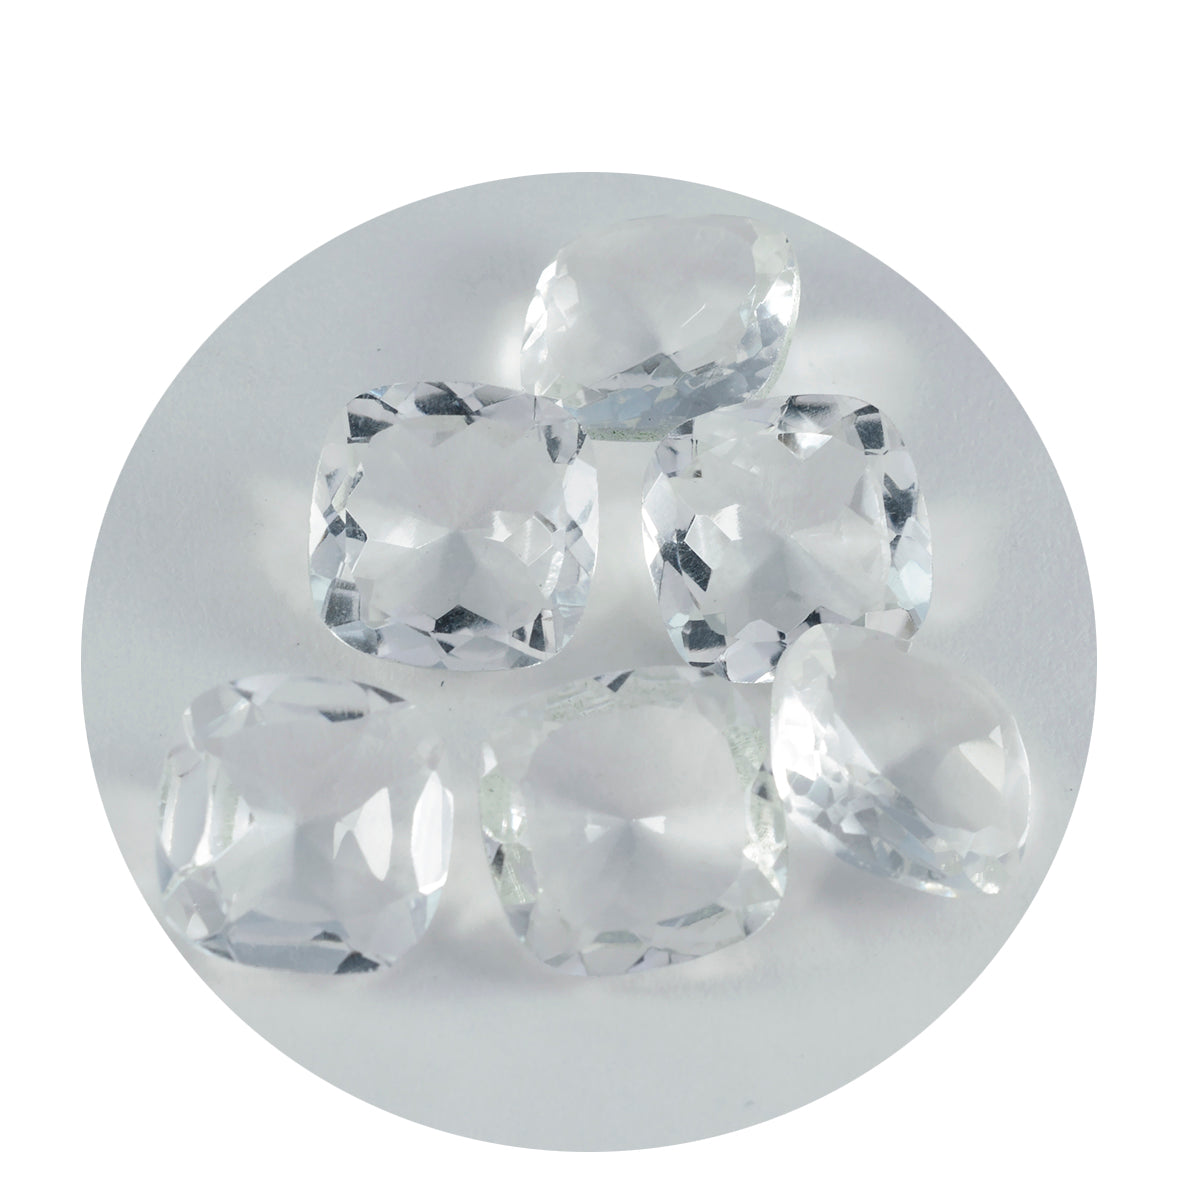 Riyogems 1PC Wit Kristal Kwarts Facet 13x13 mm Kussenvorm verbazingwekkende Kwaliteit Edelstenen